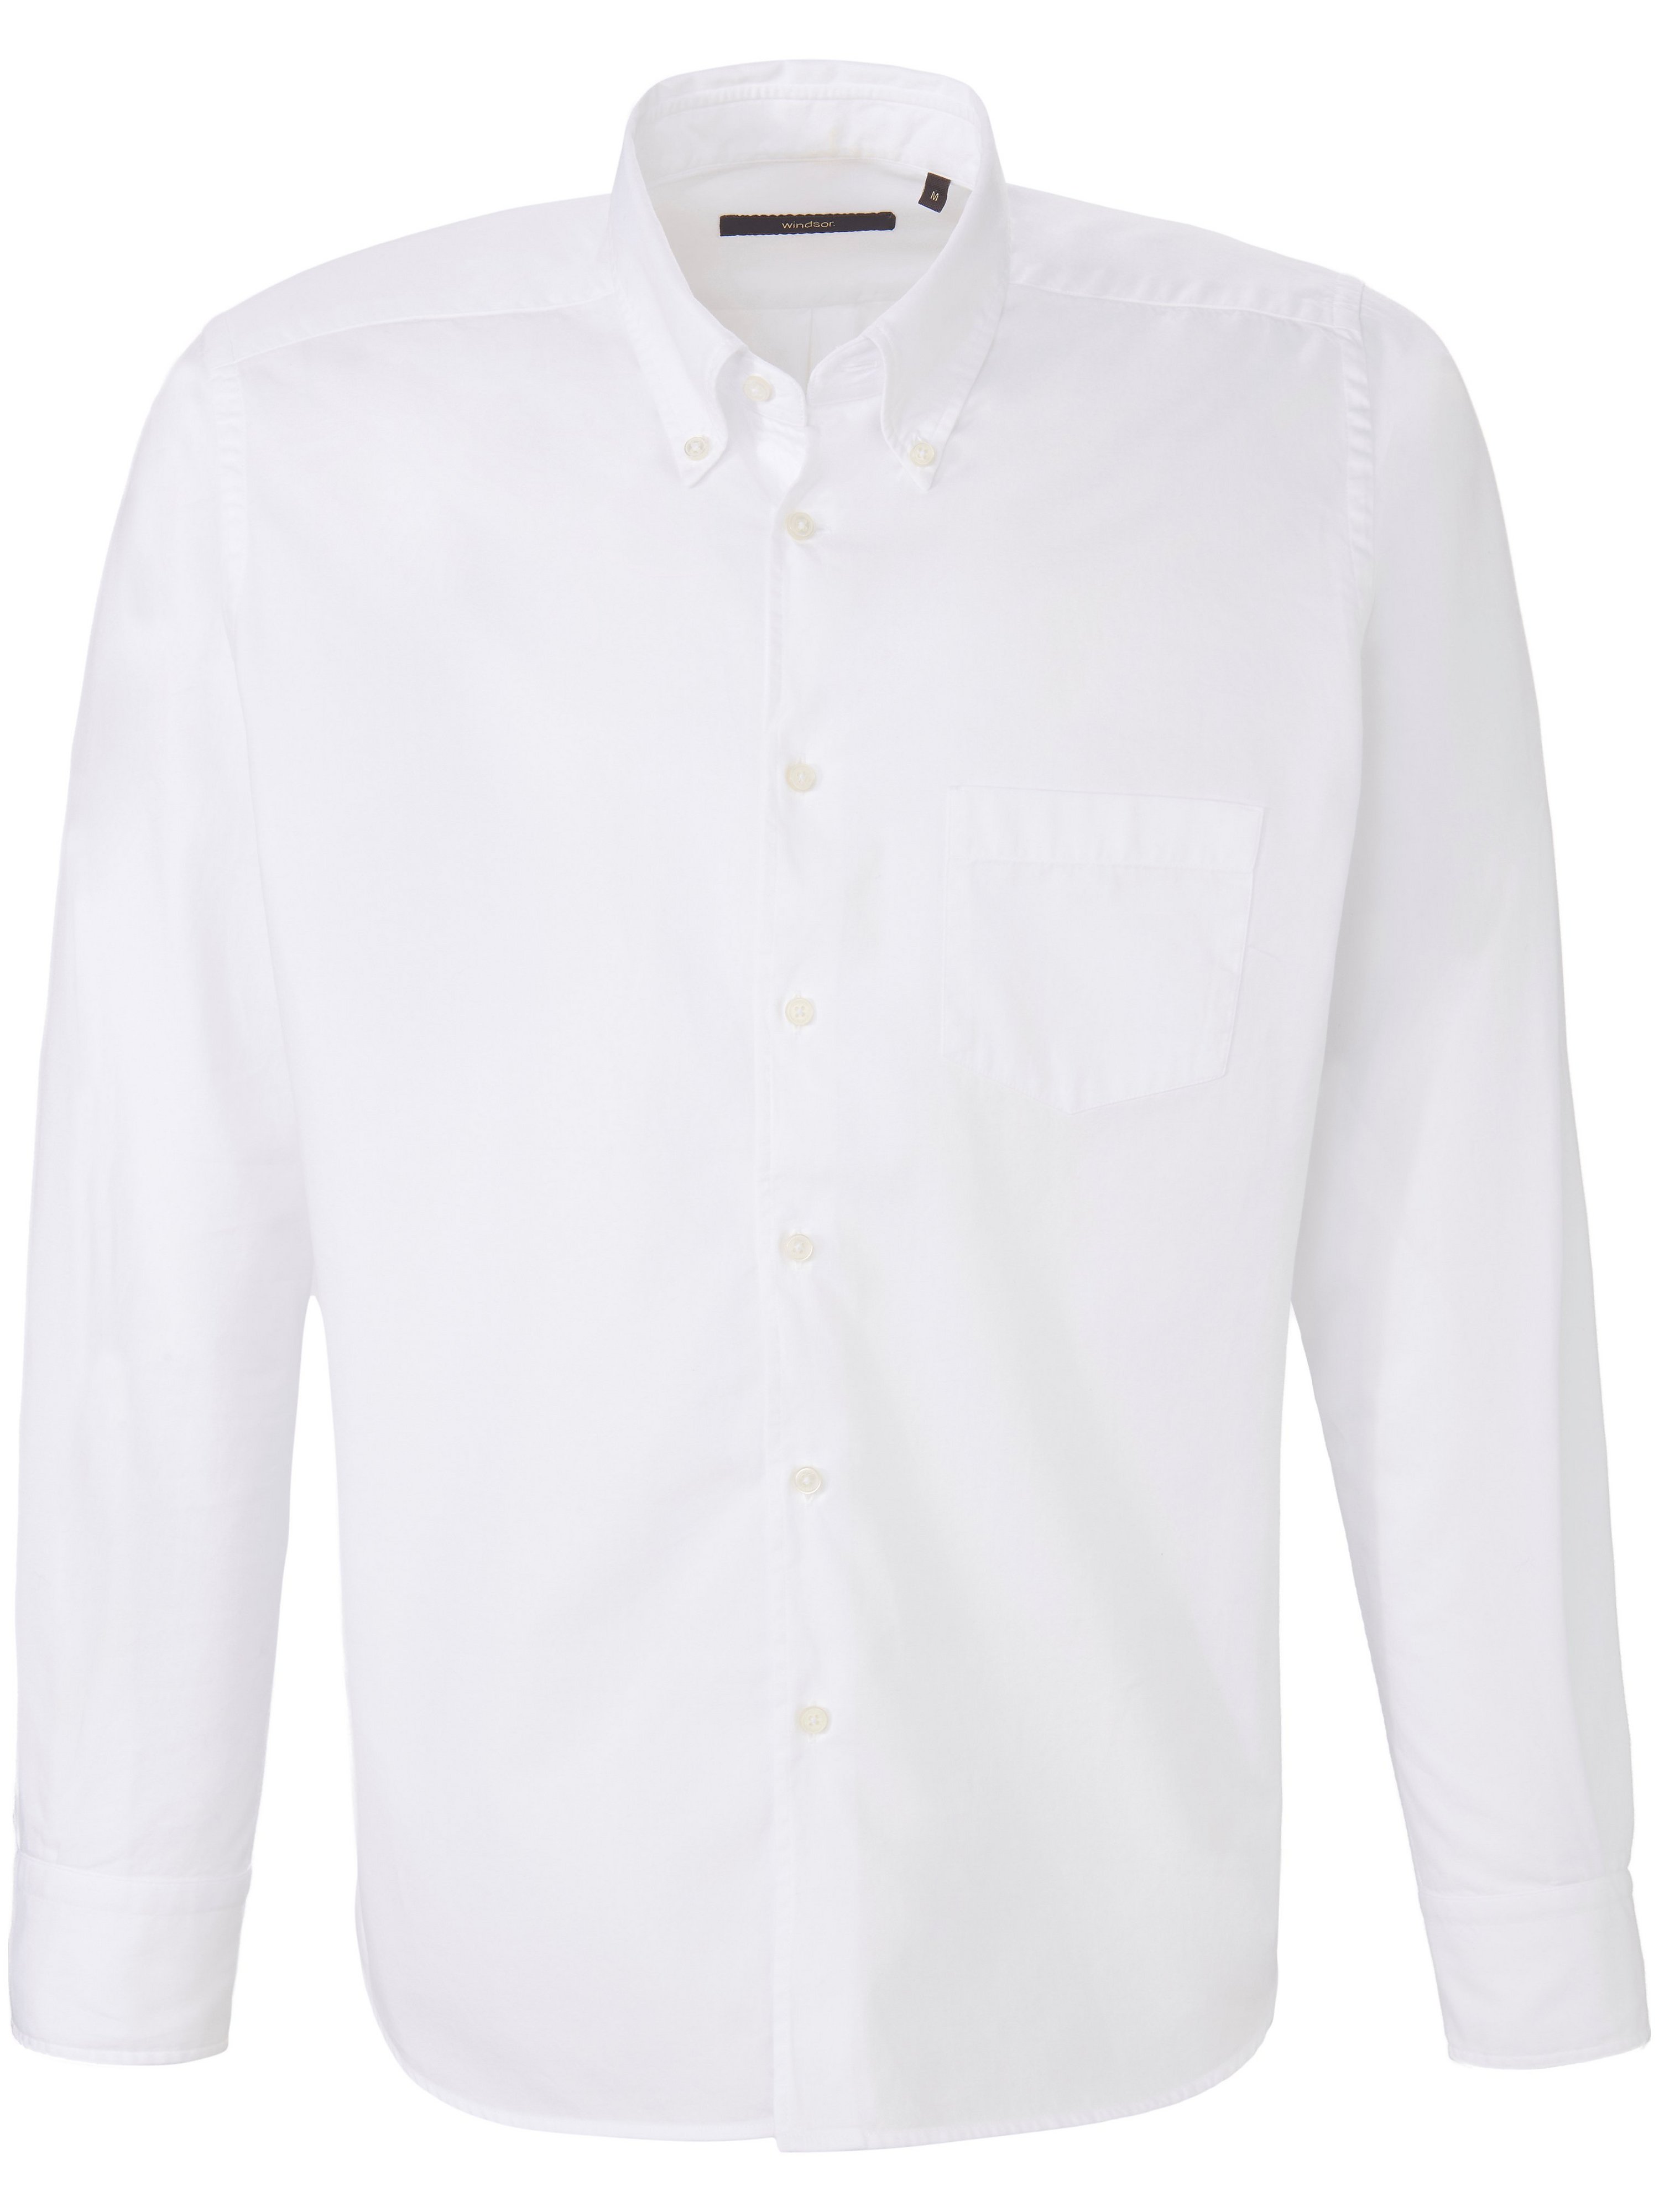 La chemise  Windsor blanc taille 41/42